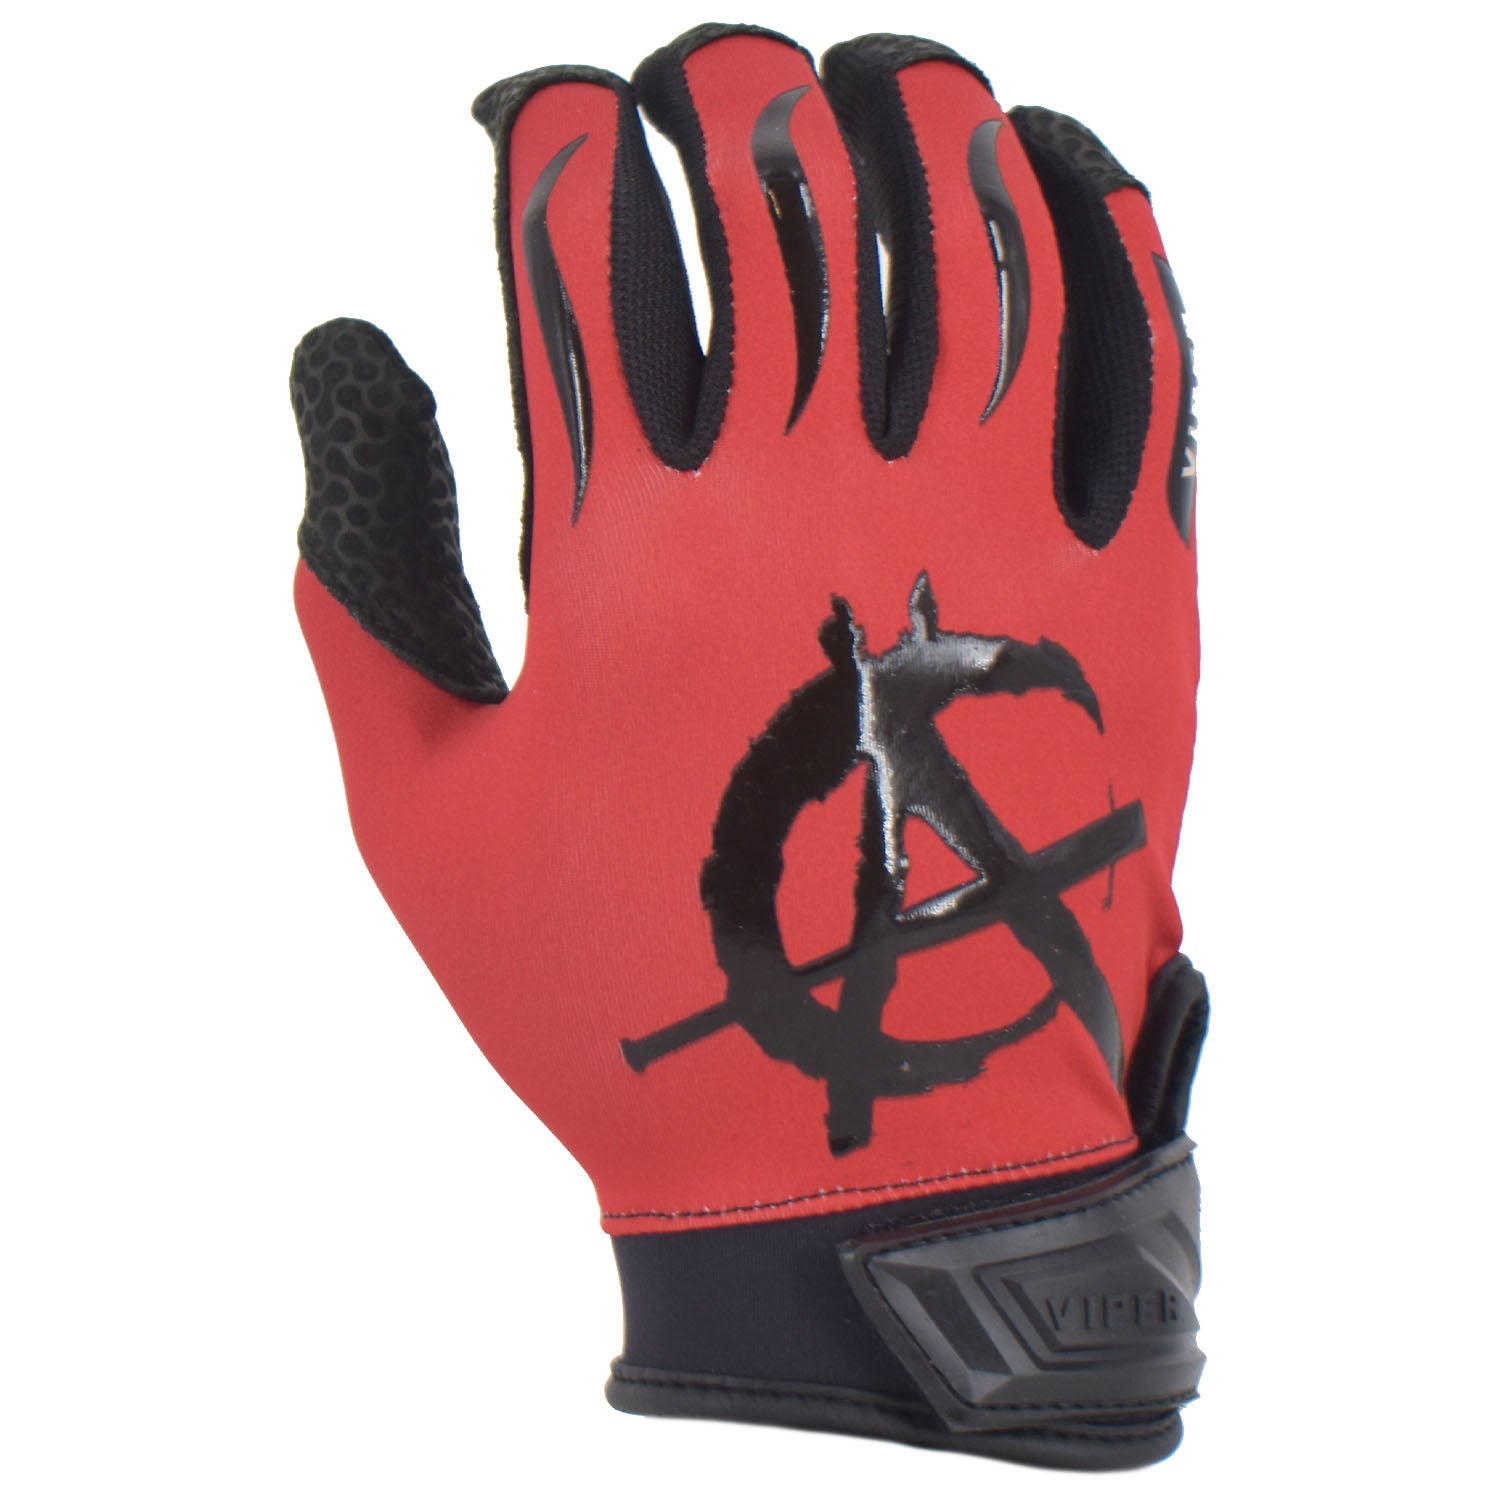 Viper Lite Premium Batting Gloves Leather Palm - Anarchy Edition Red/Black - Smash It Sports